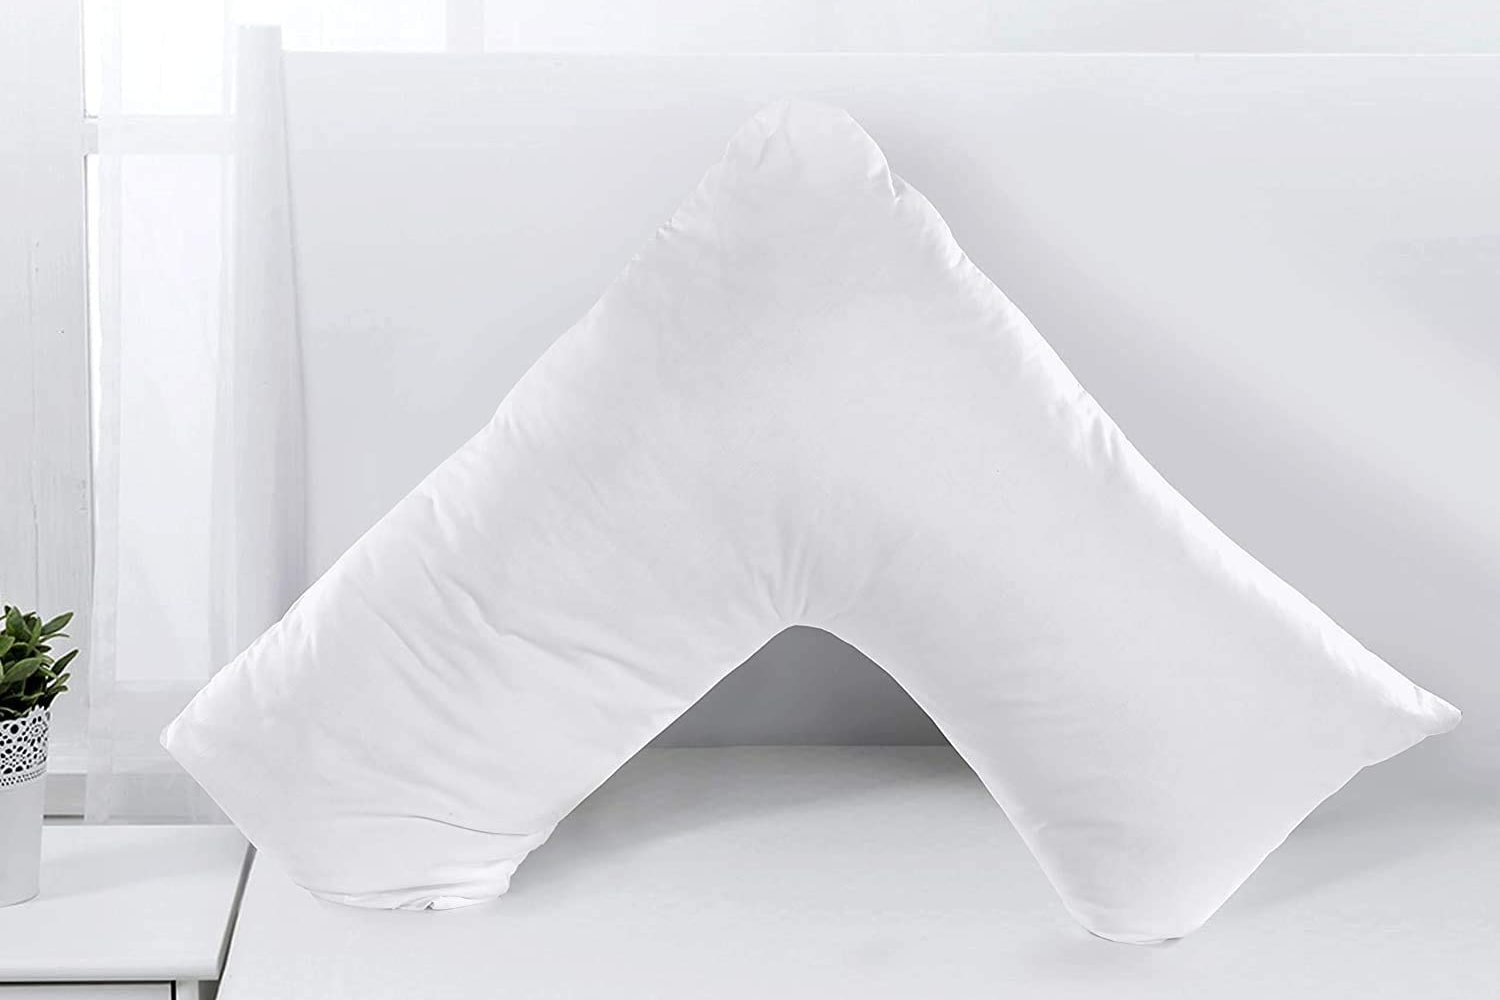 V-Shaped Pillowcase